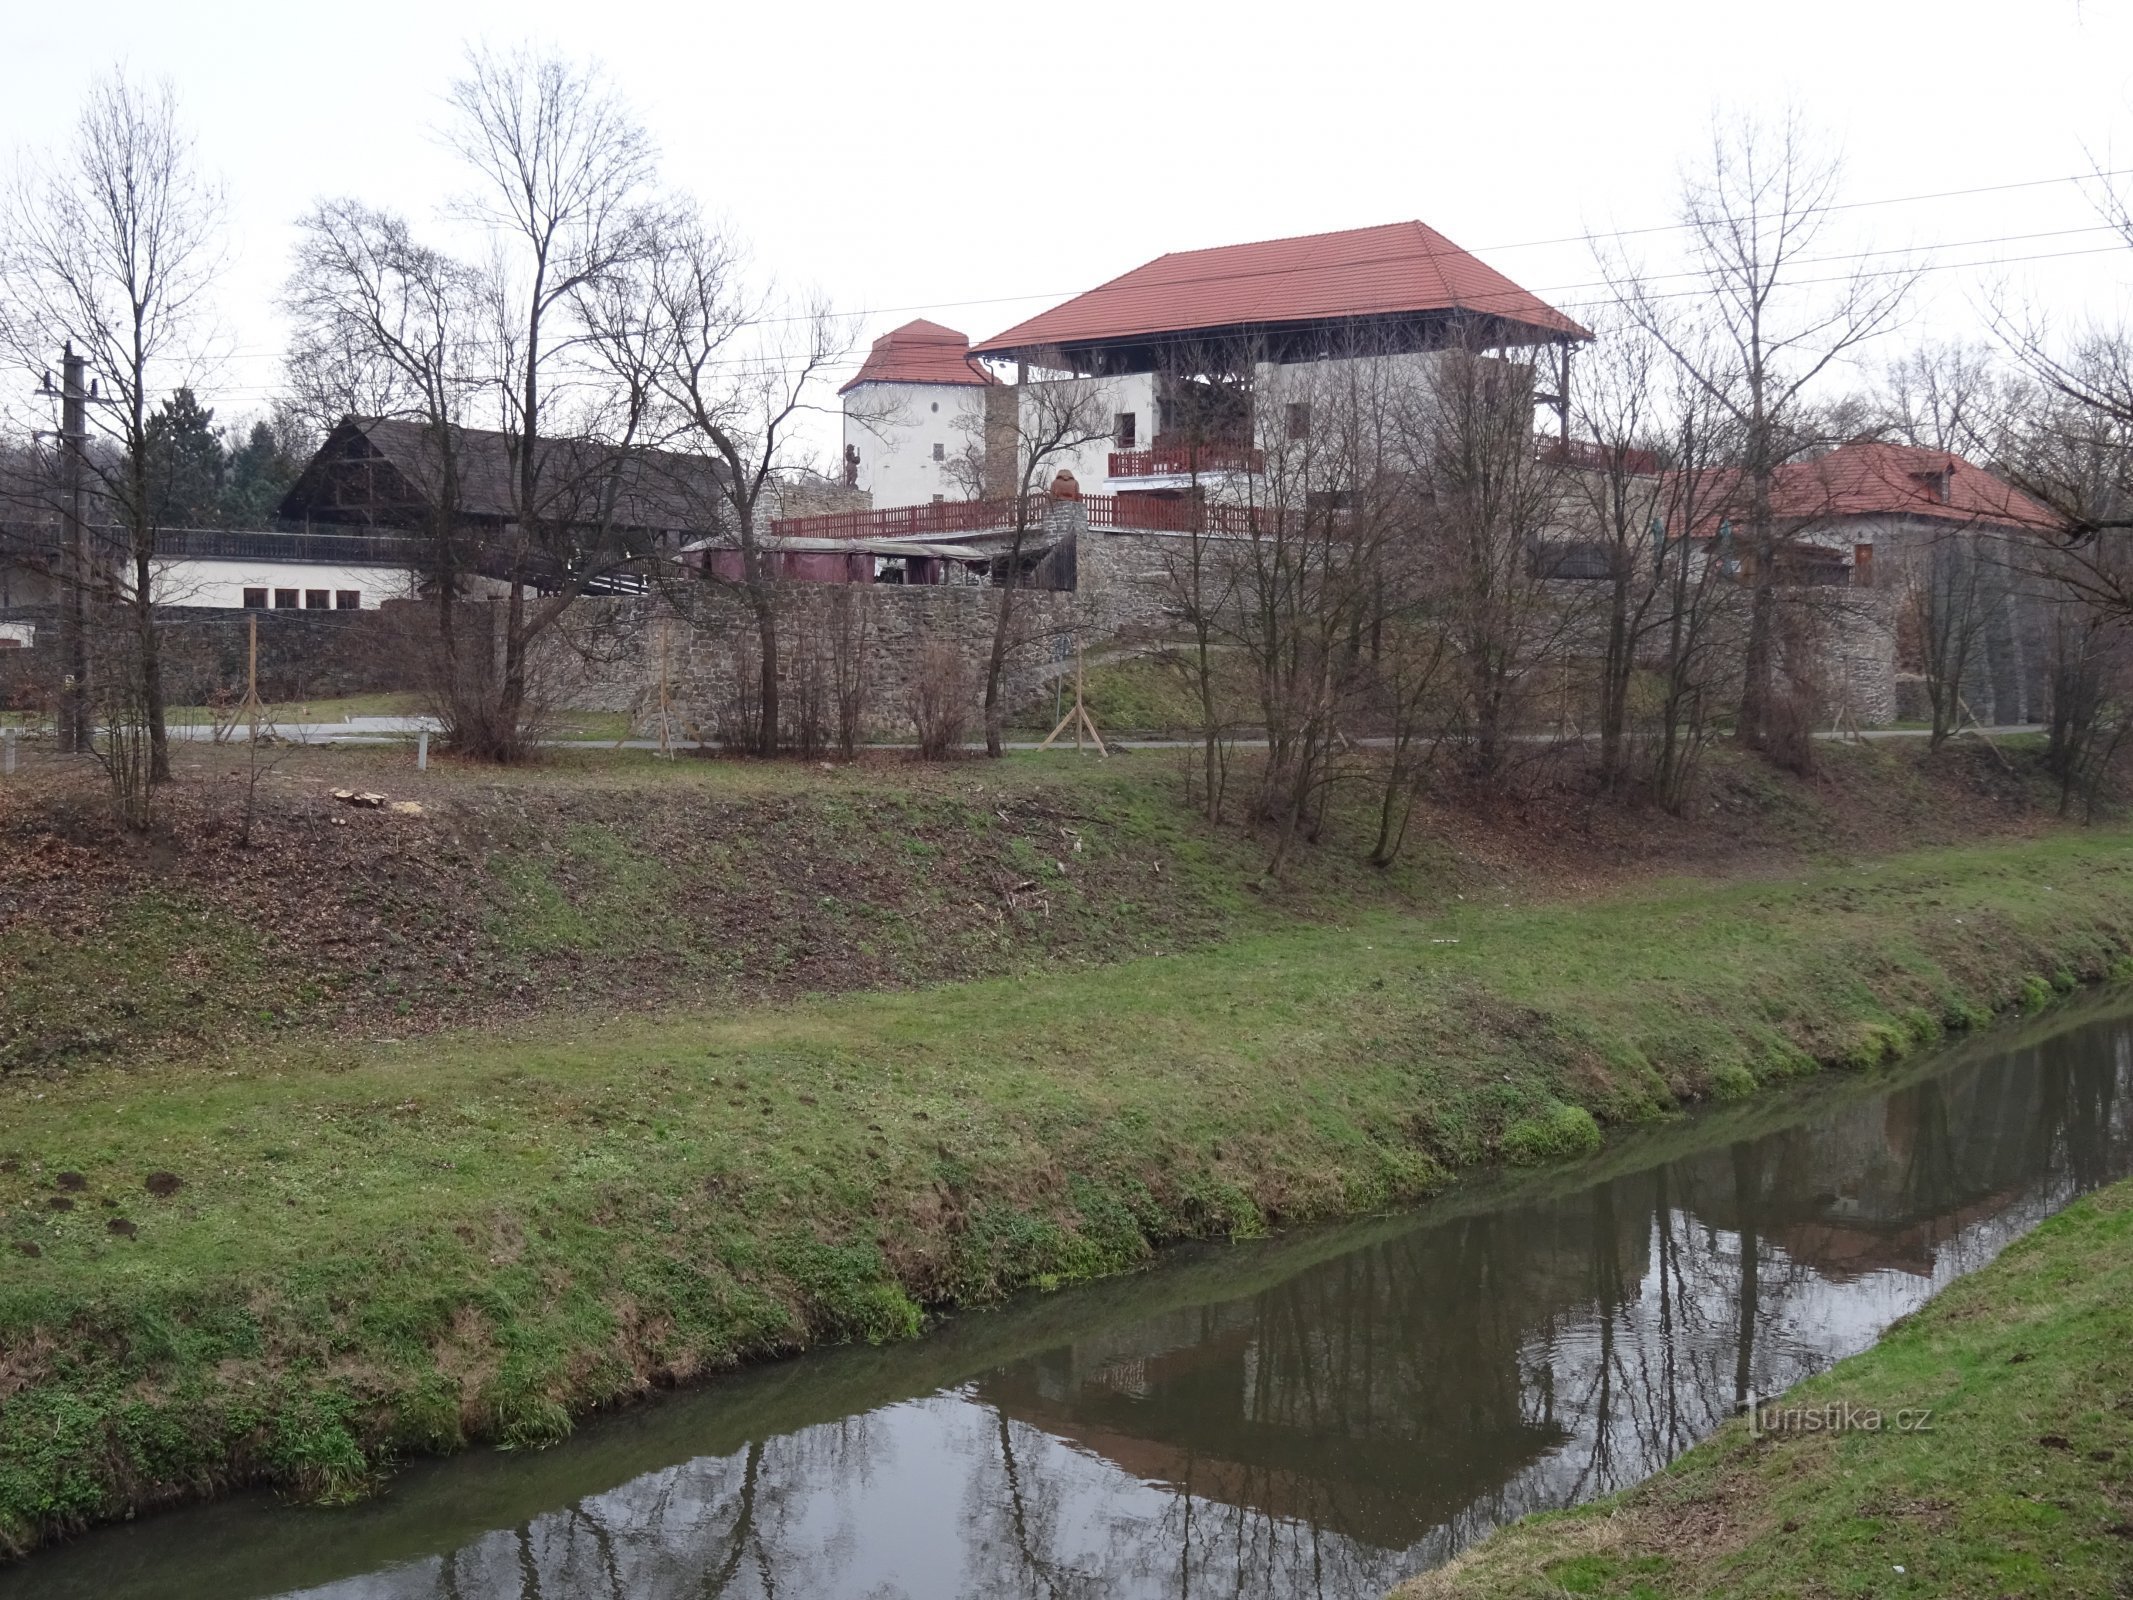 Dvorac Ostrava